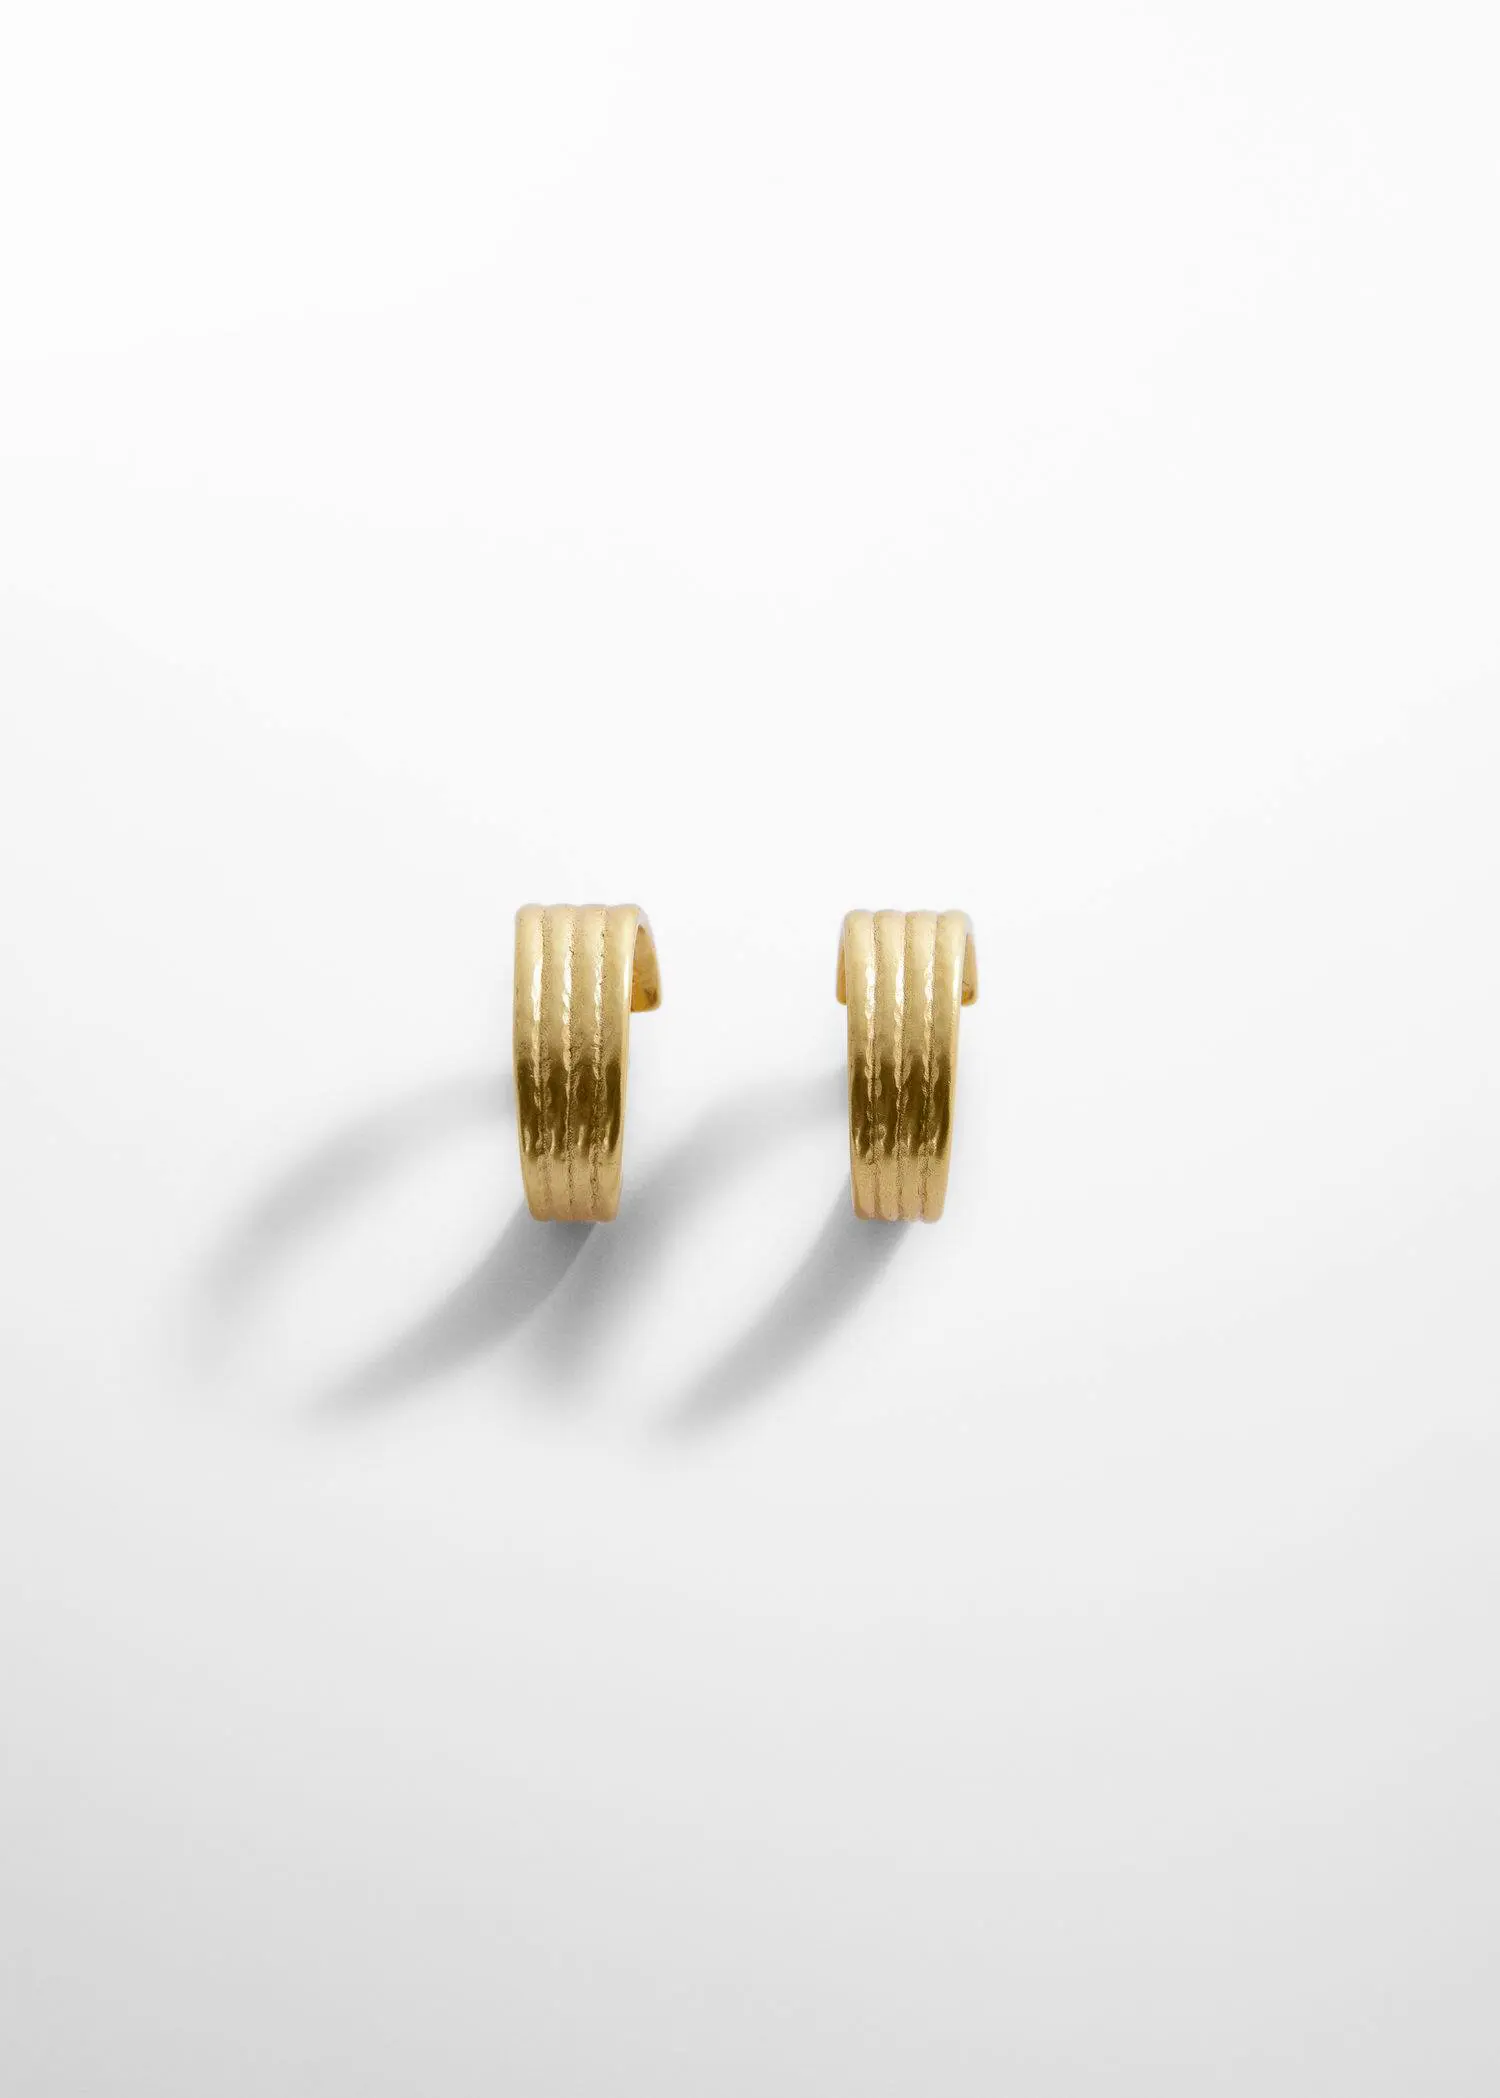 Mango Embossed hoop earrings. a pair of gold earrings sitting on top of a white surface. 